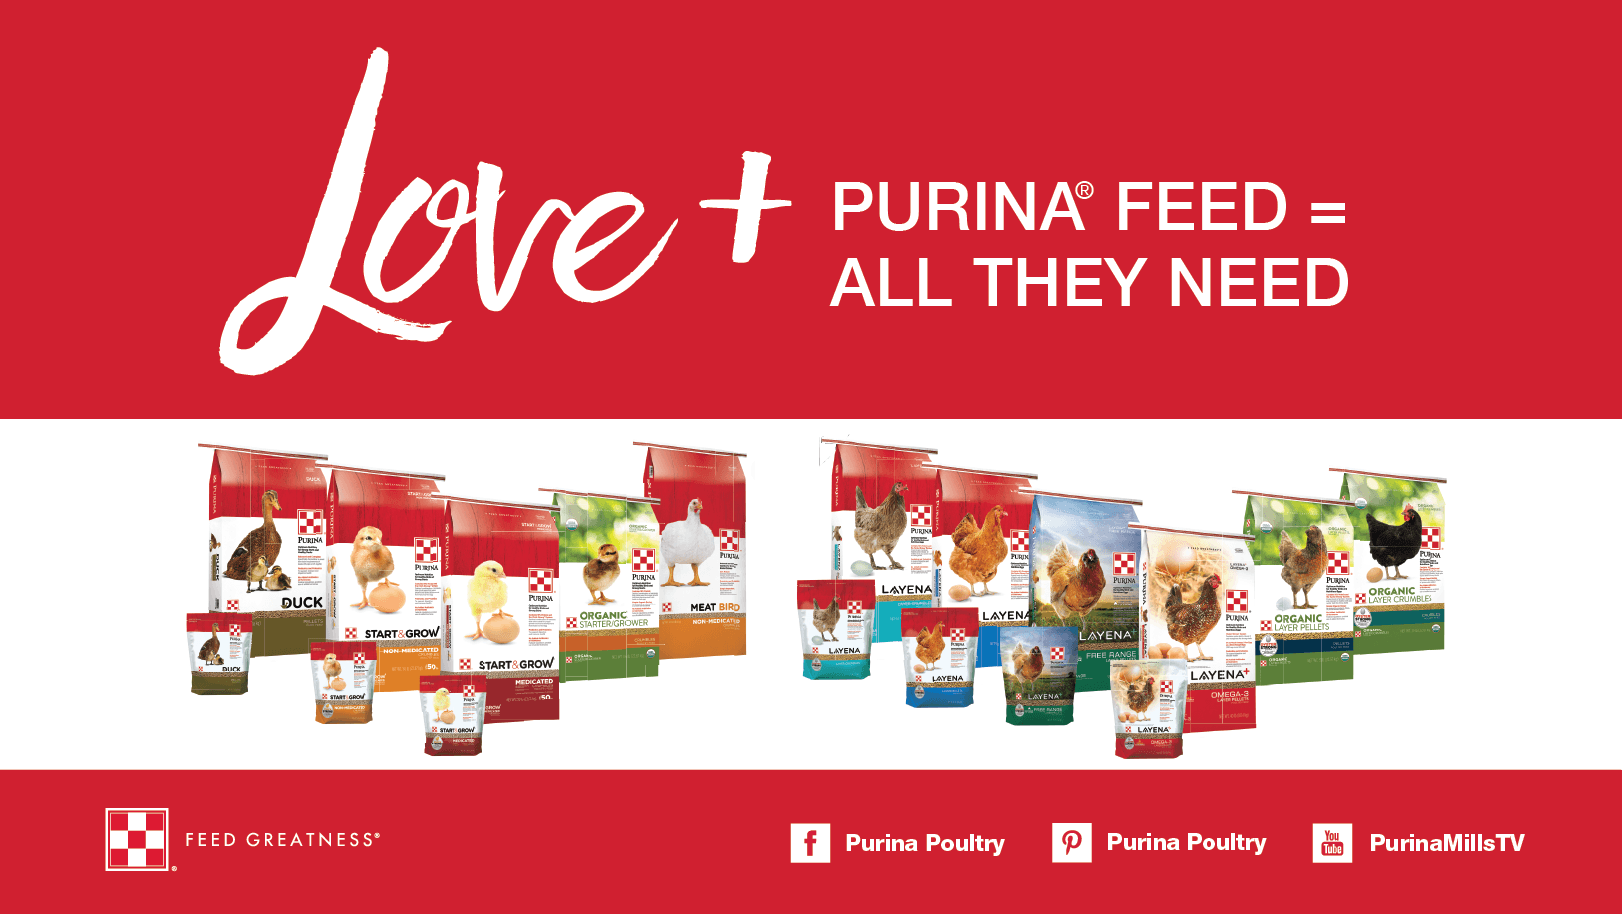 Love + Purina® Feed = All they need